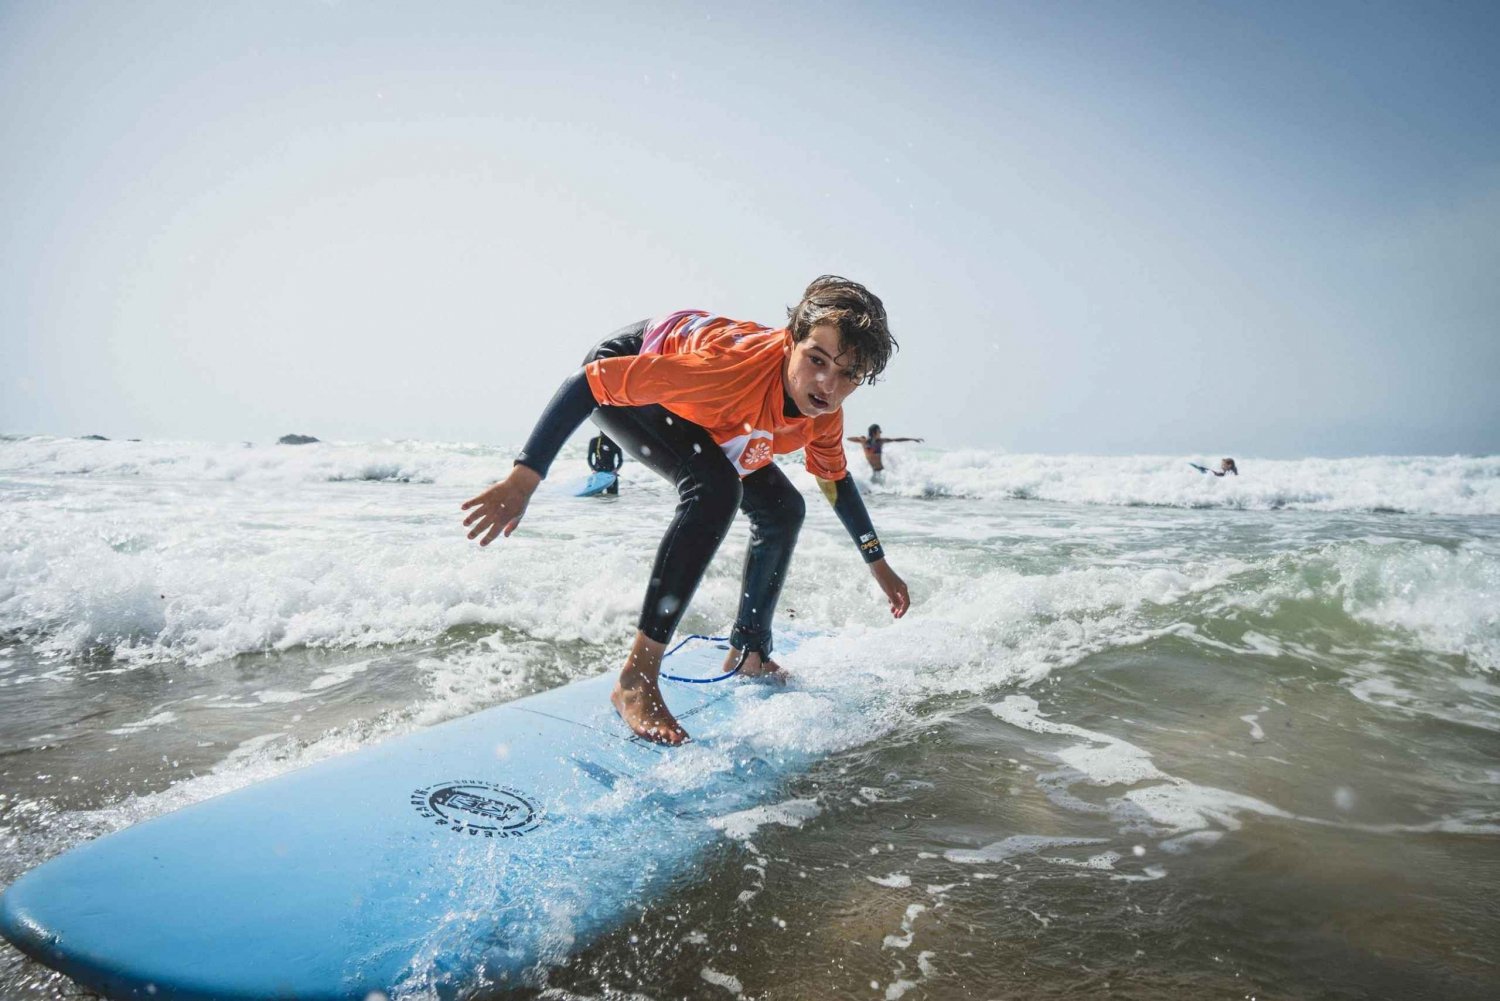 Raposeira: Surfkurser för alla nivåer